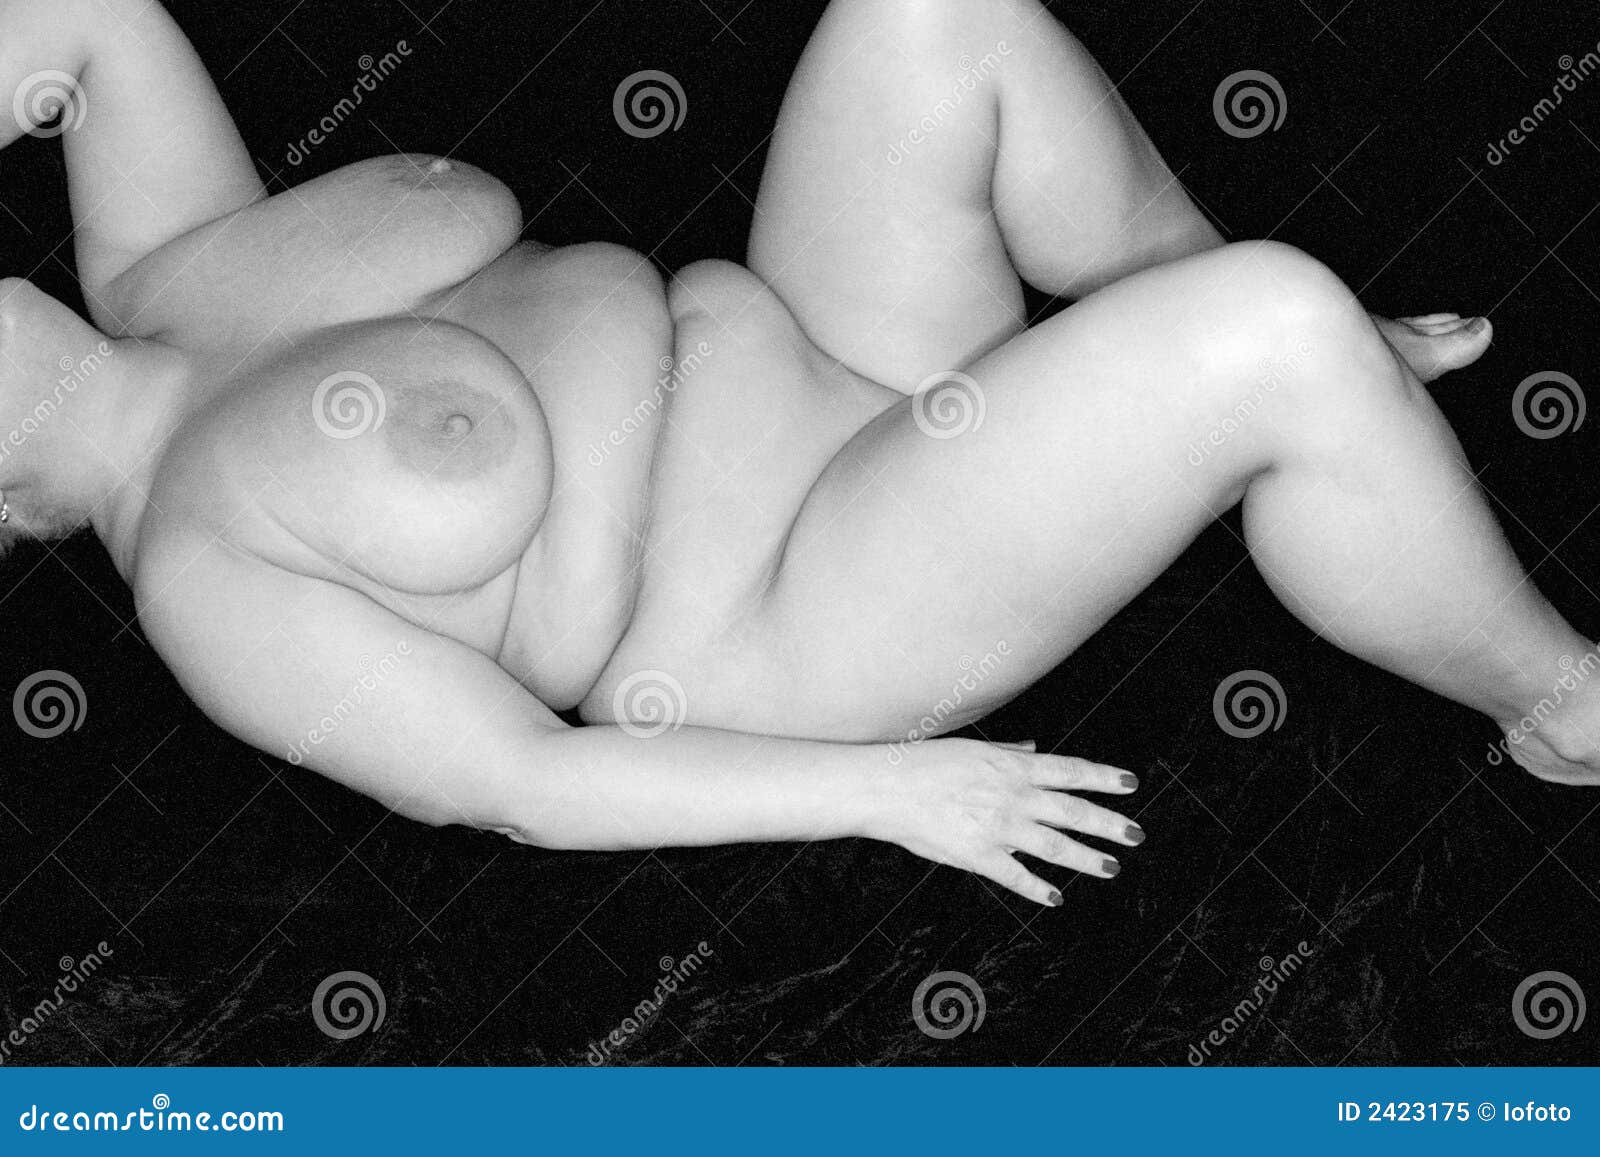 Full Figured Nude Women Pictures 24